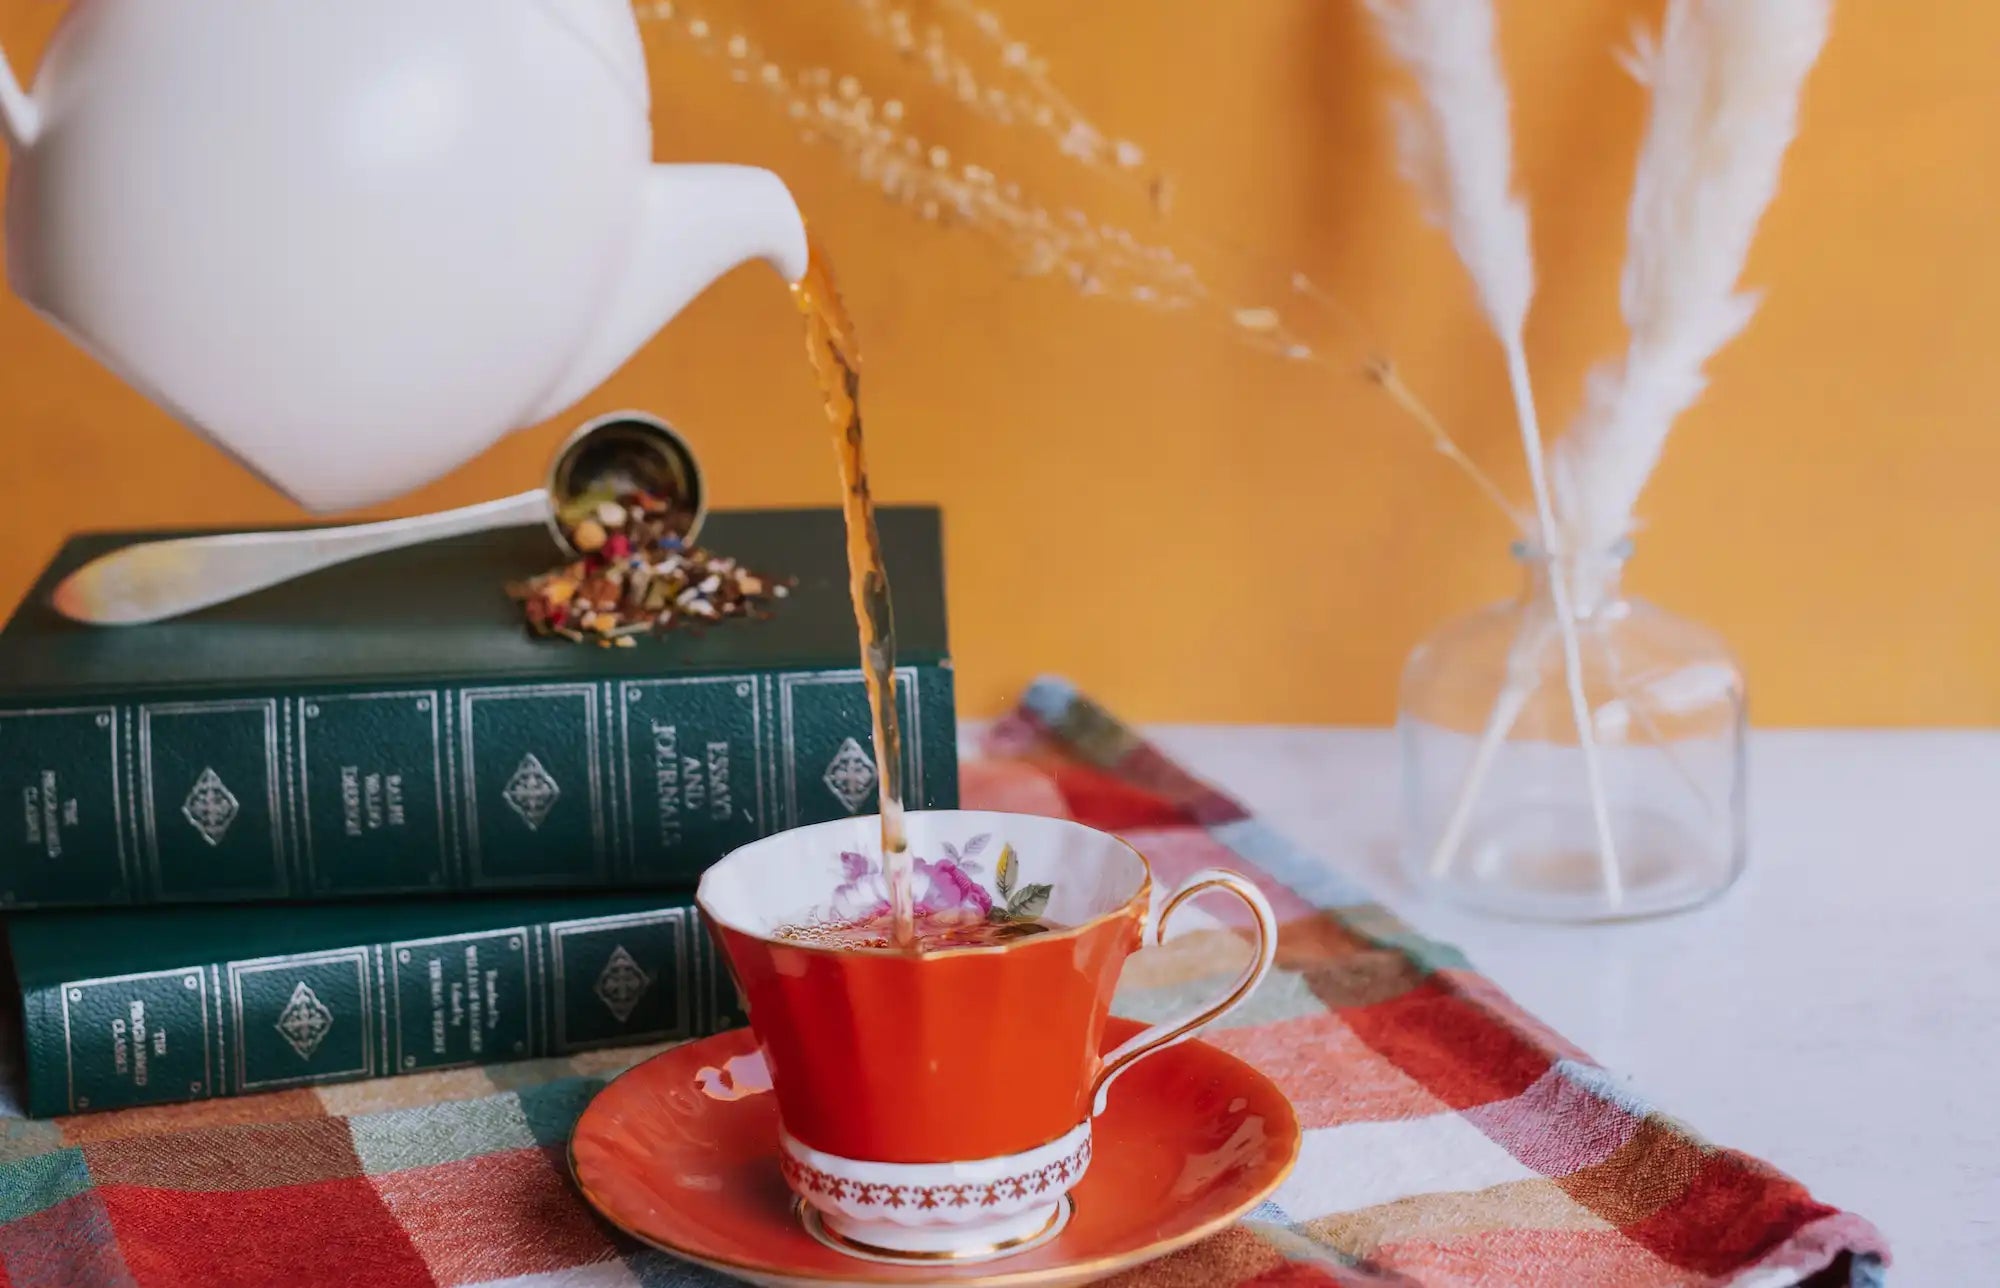 pouring spirit of life cirtus herbal into an orange vintage teacup